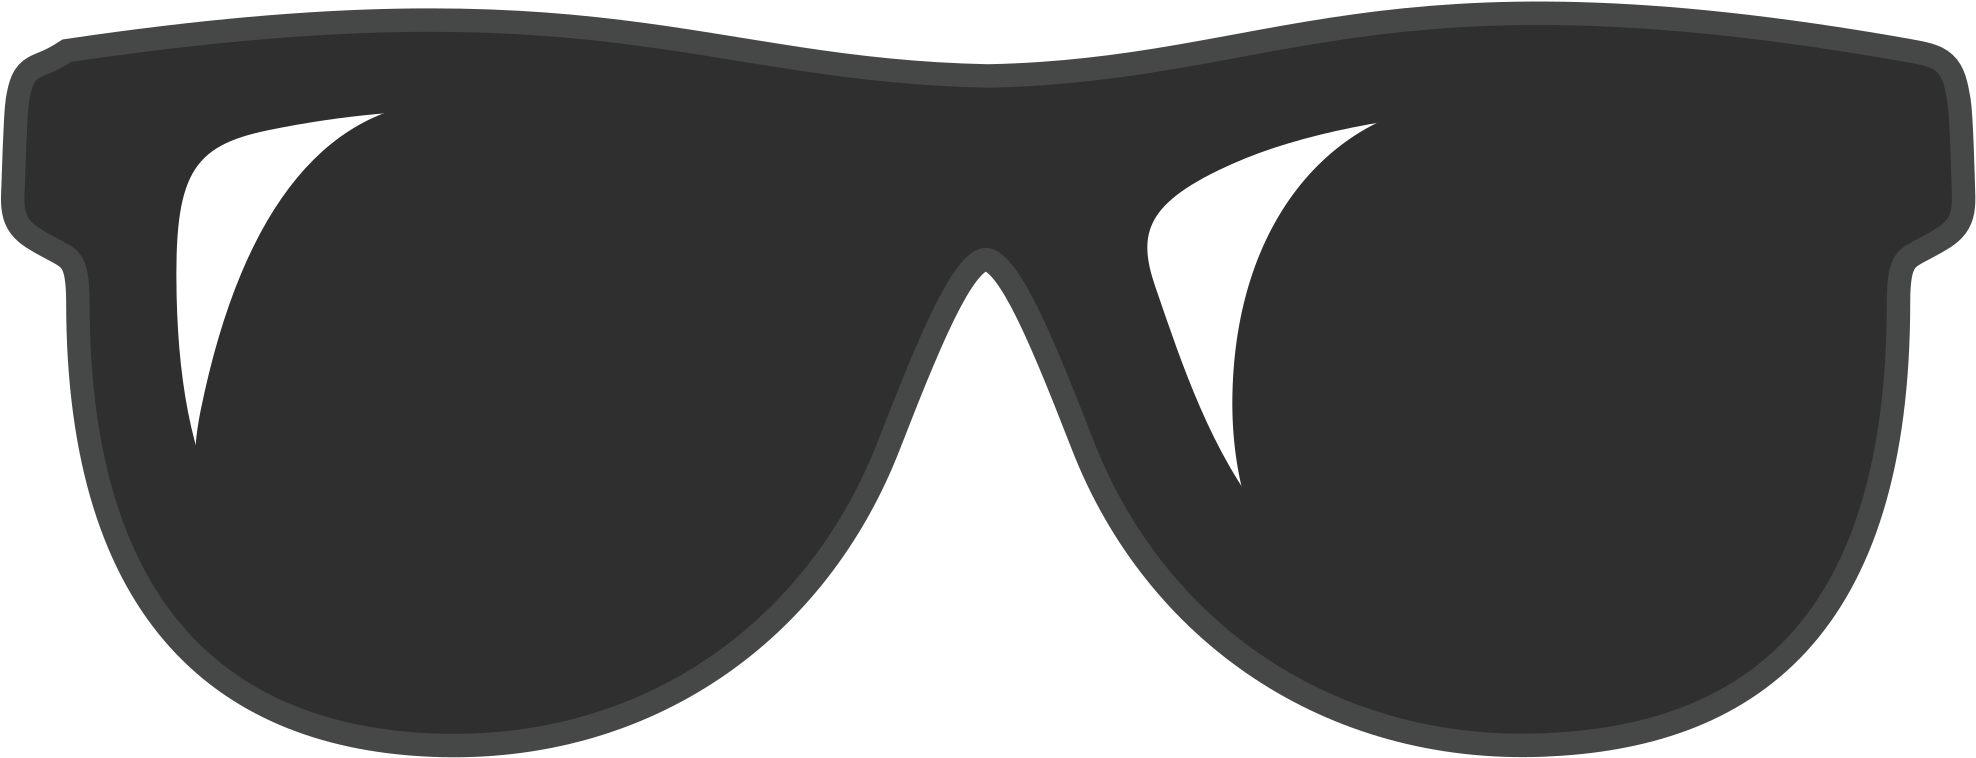 Confident Emoticon For Kids - Sunglasses Emoji Png (2000x2000)